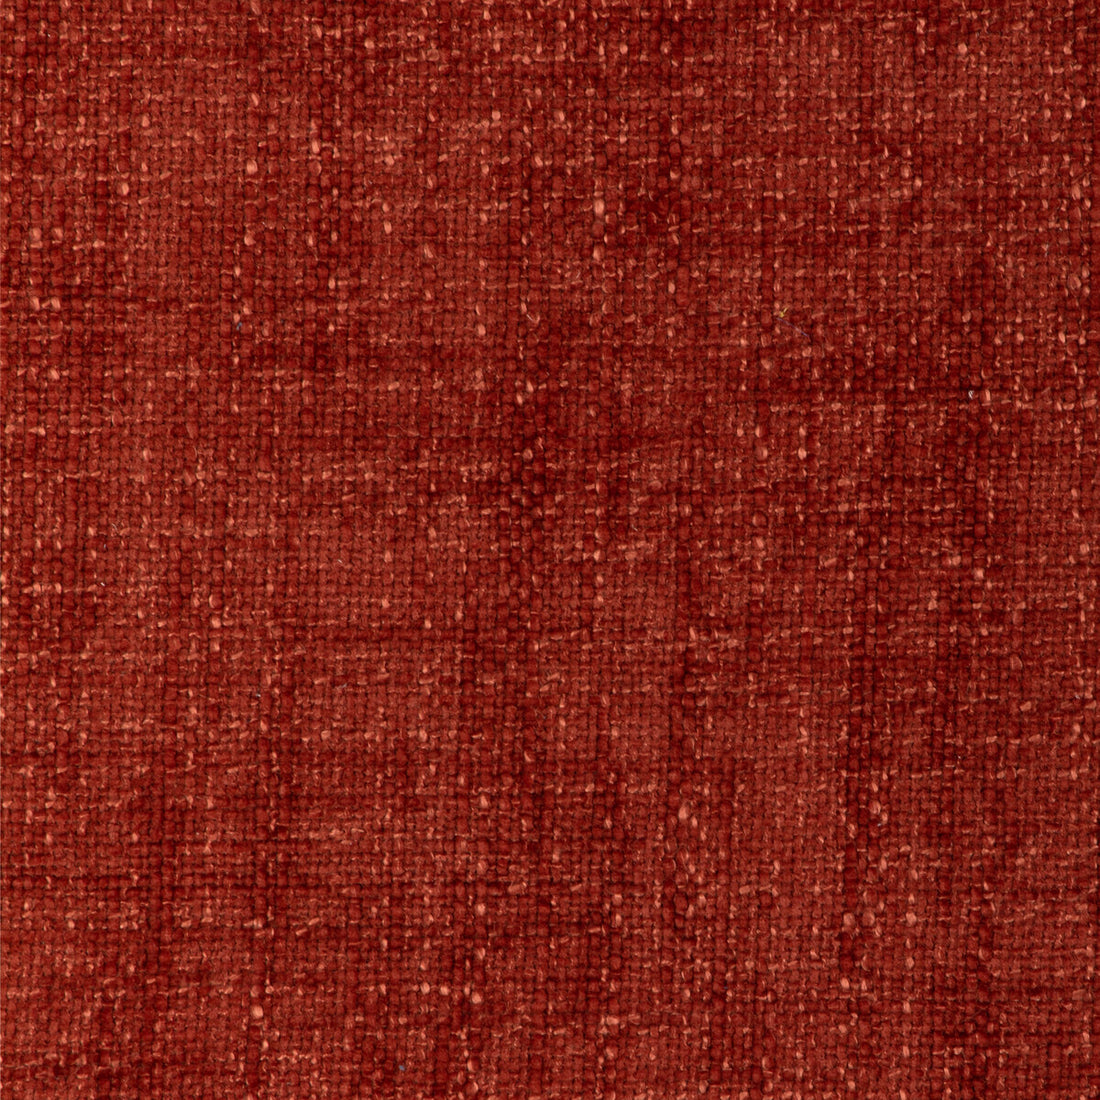 Kravet Smart fabric in 36677-619 color - pattern 36677.619.0 - by Kravet Smart in the Performance Kravetarmor collection